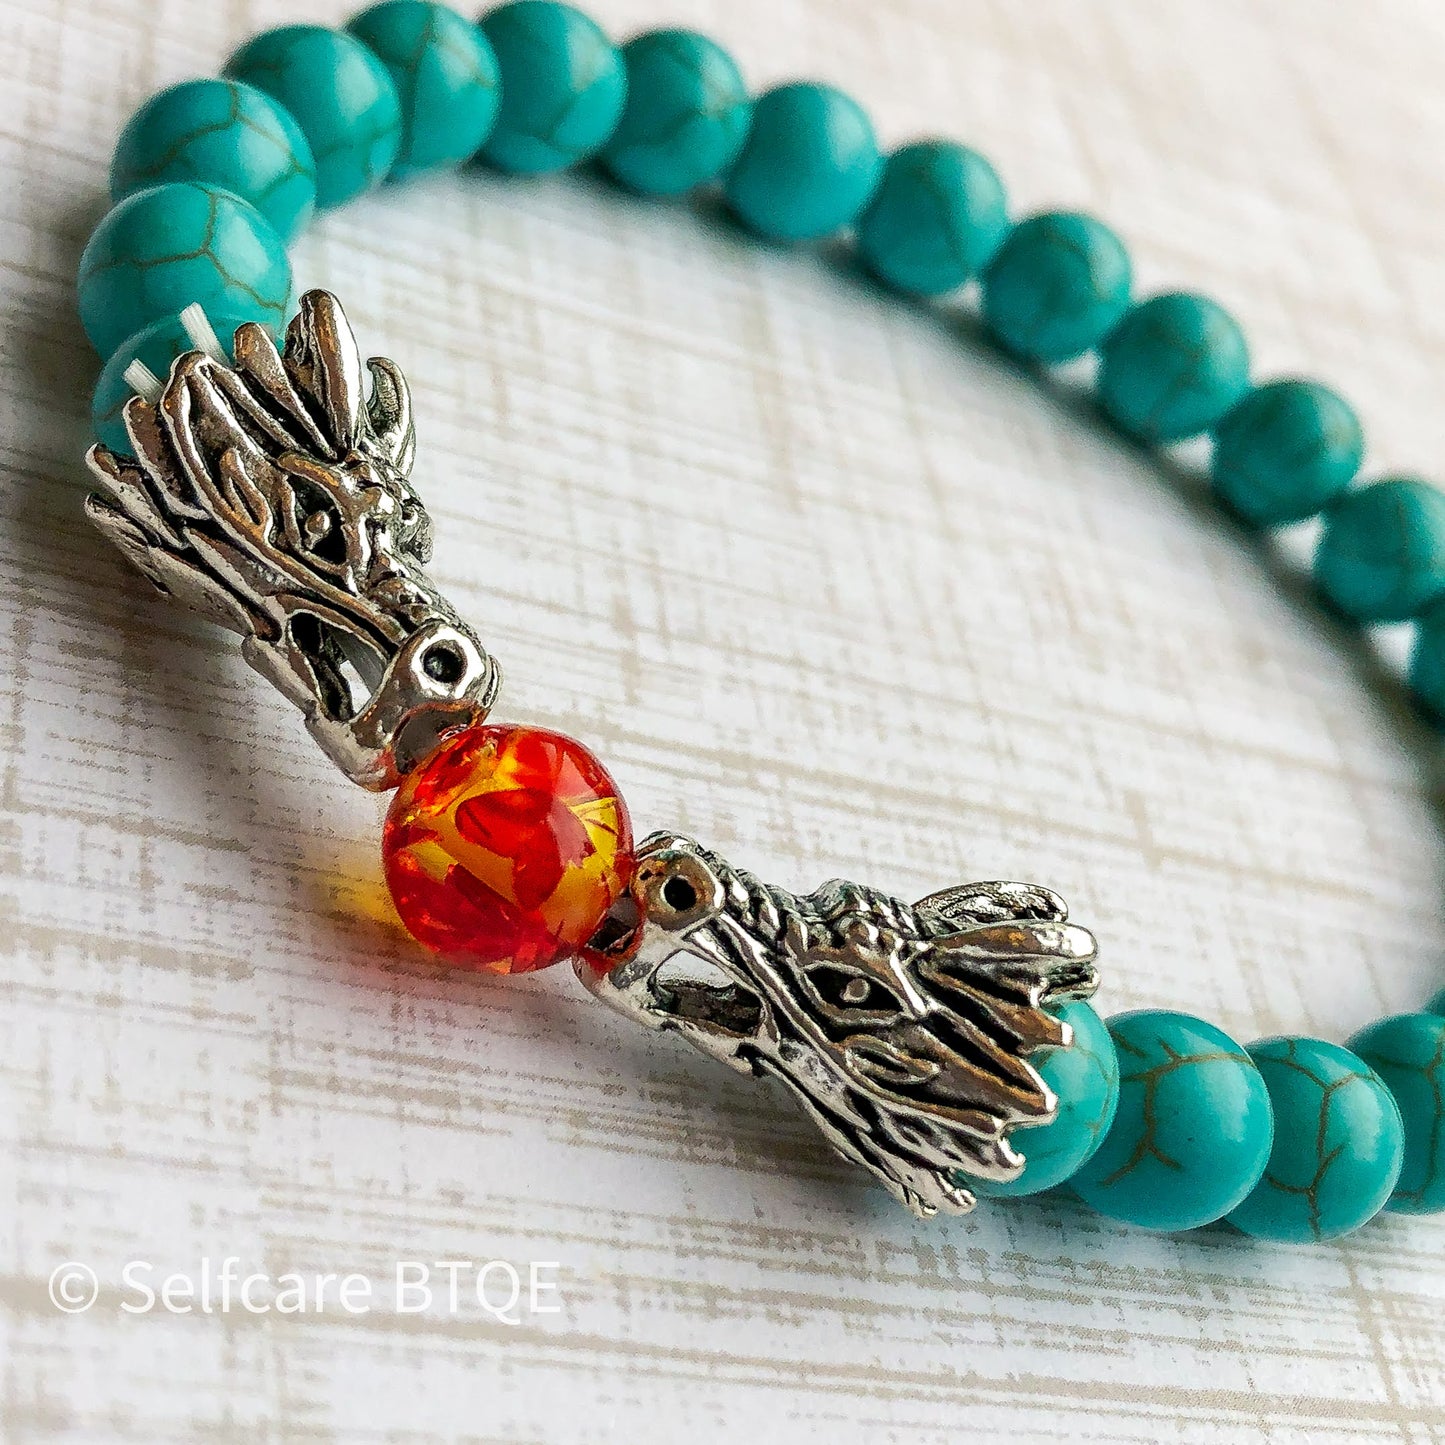 Dragon Bracelet Turquoise Stone & Amber Resin Dragon Head Beads